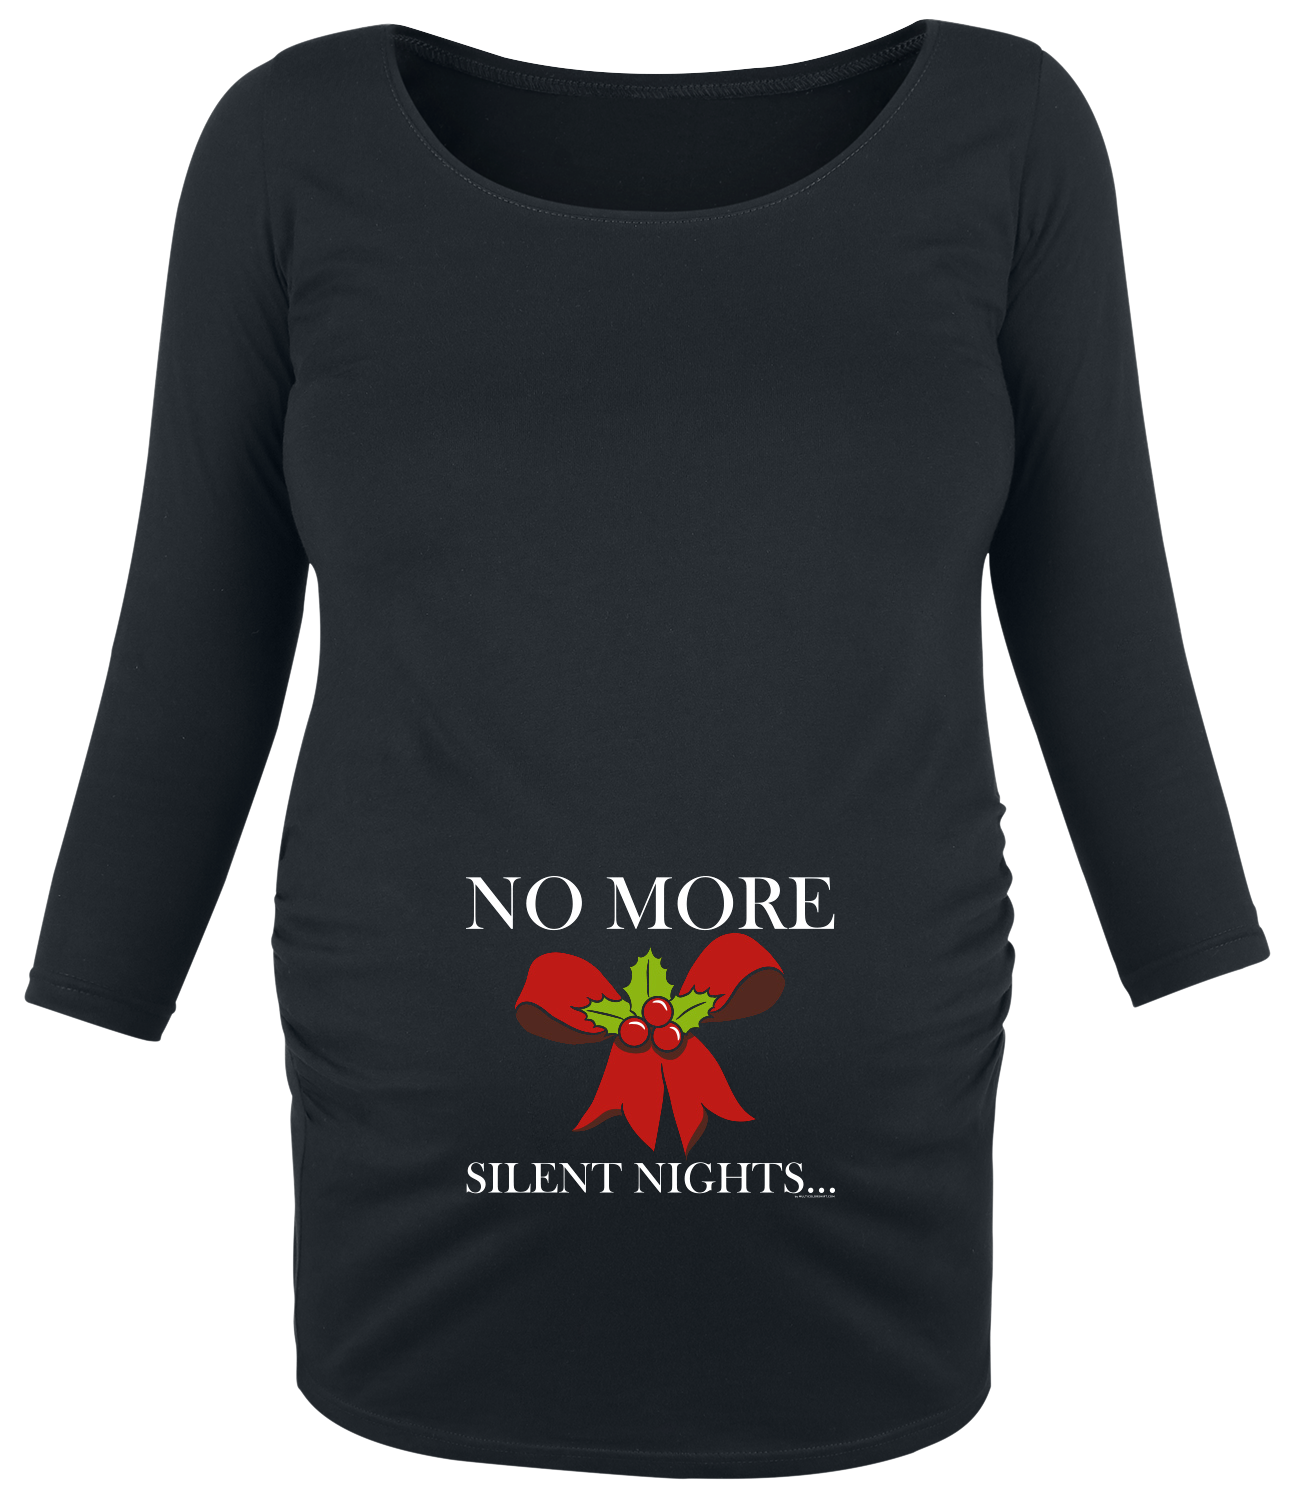 Maternity fashion - No More Silent Nights... - Girls longsleeve - black image